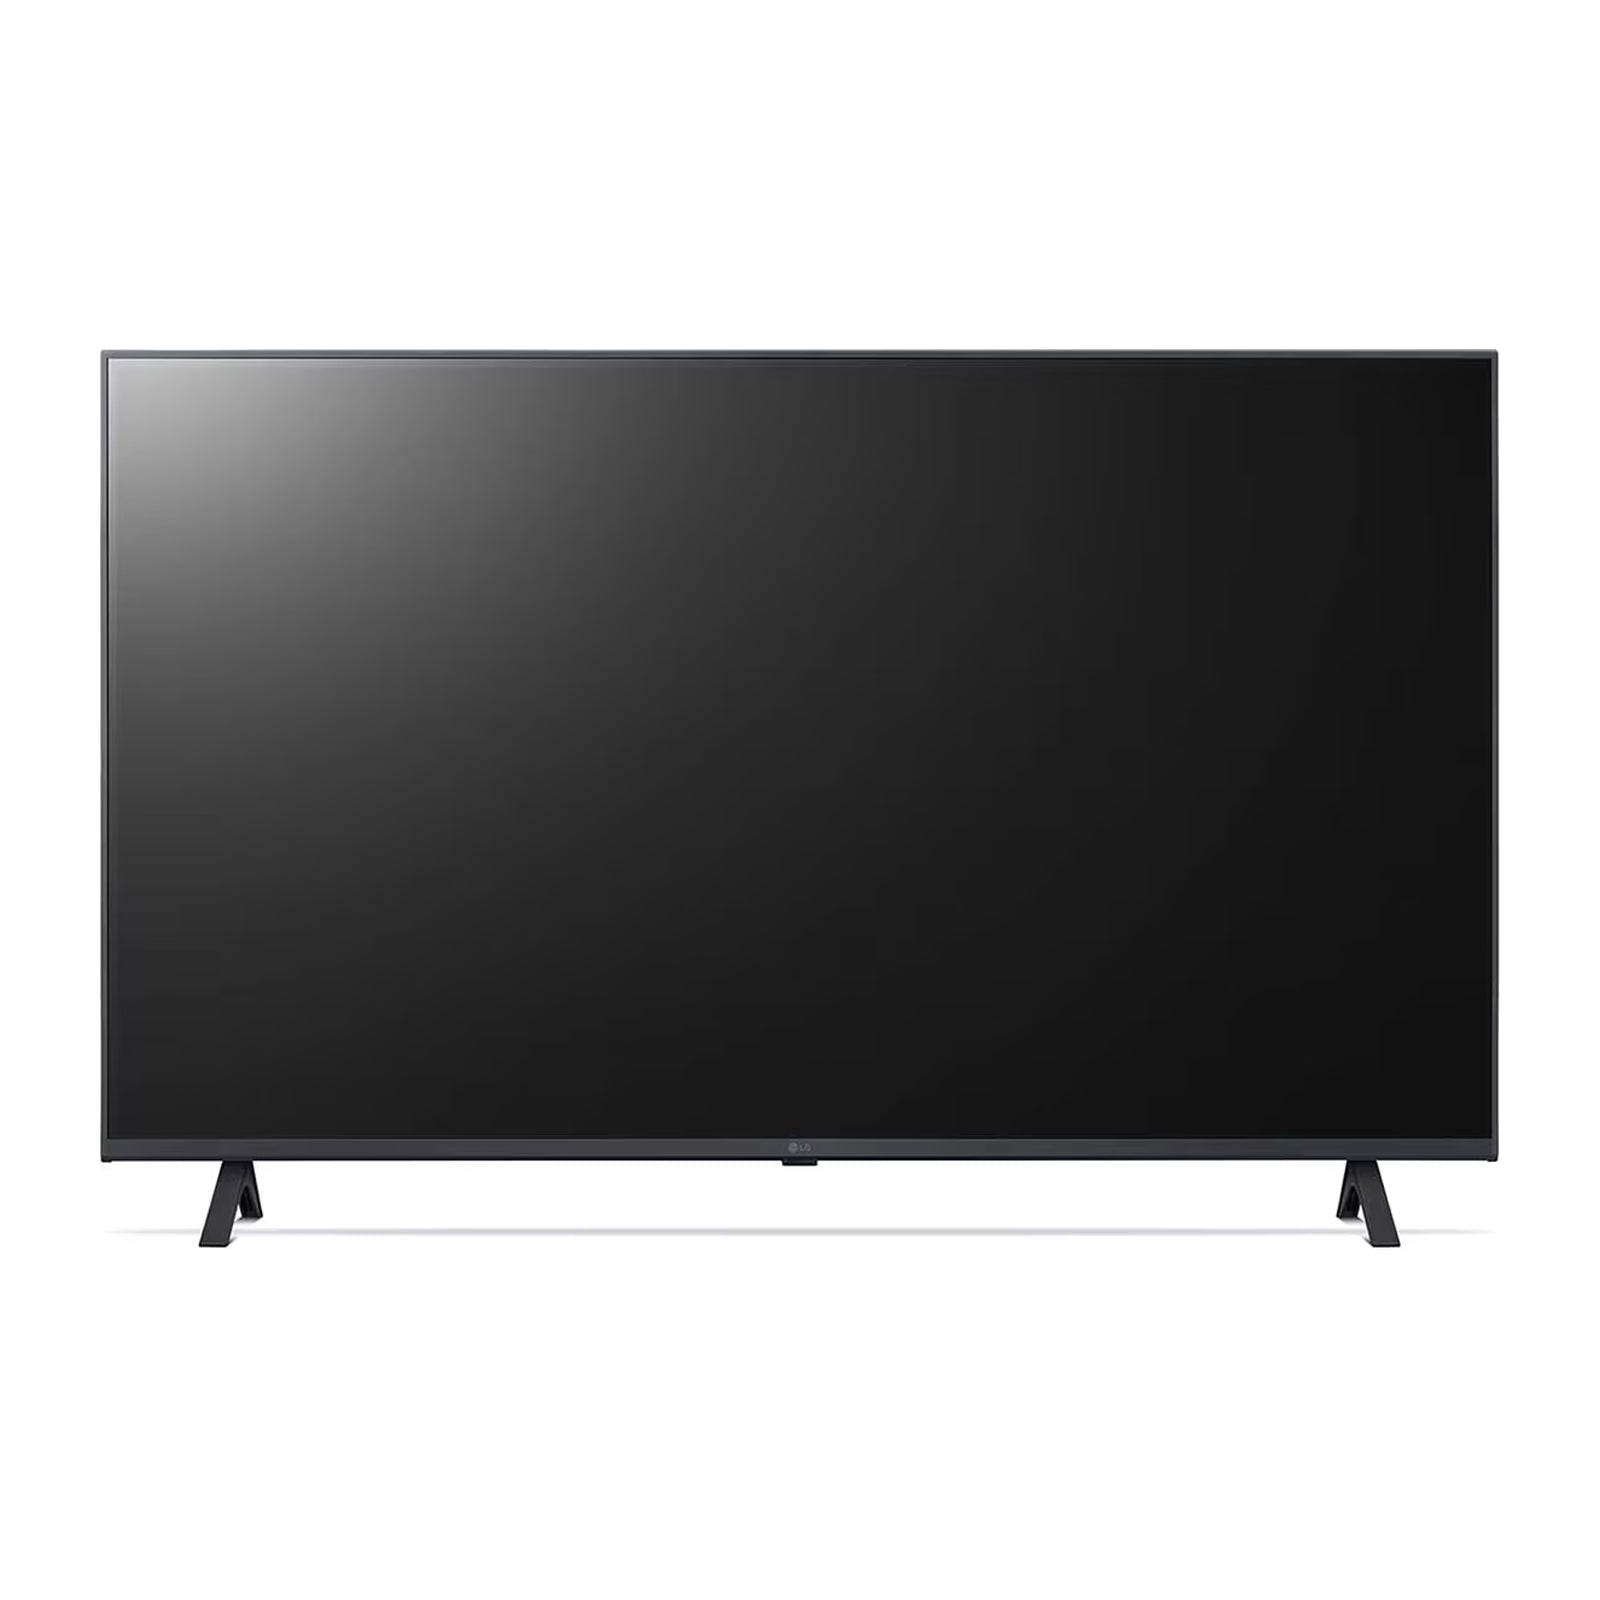 Pantalla LED LG 65 Ultra HD 4K Smart TV 65UR7800PSB